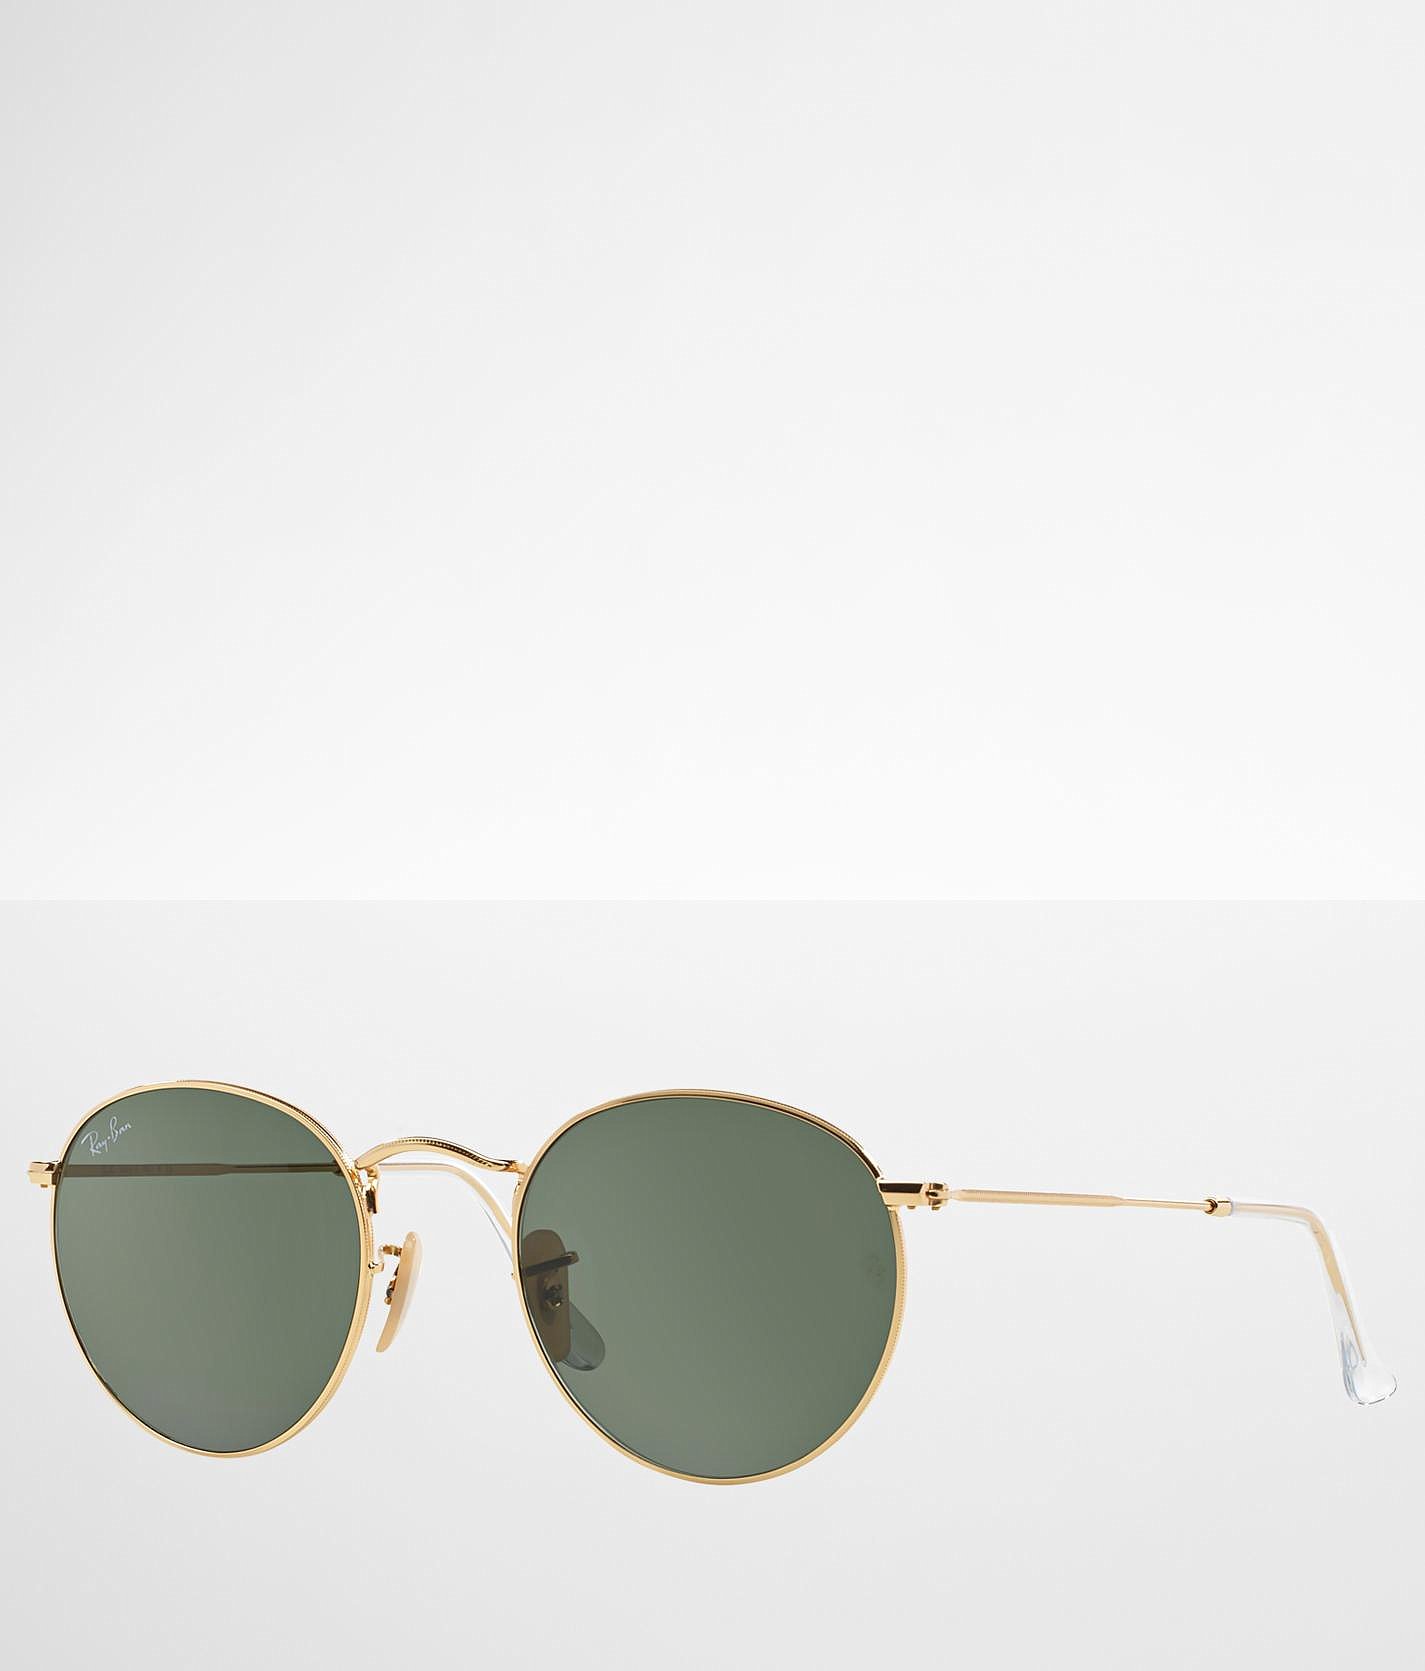 Ray-ban Sunglasses Round Metal Unisex Gold Frame Green Lenses 50-21